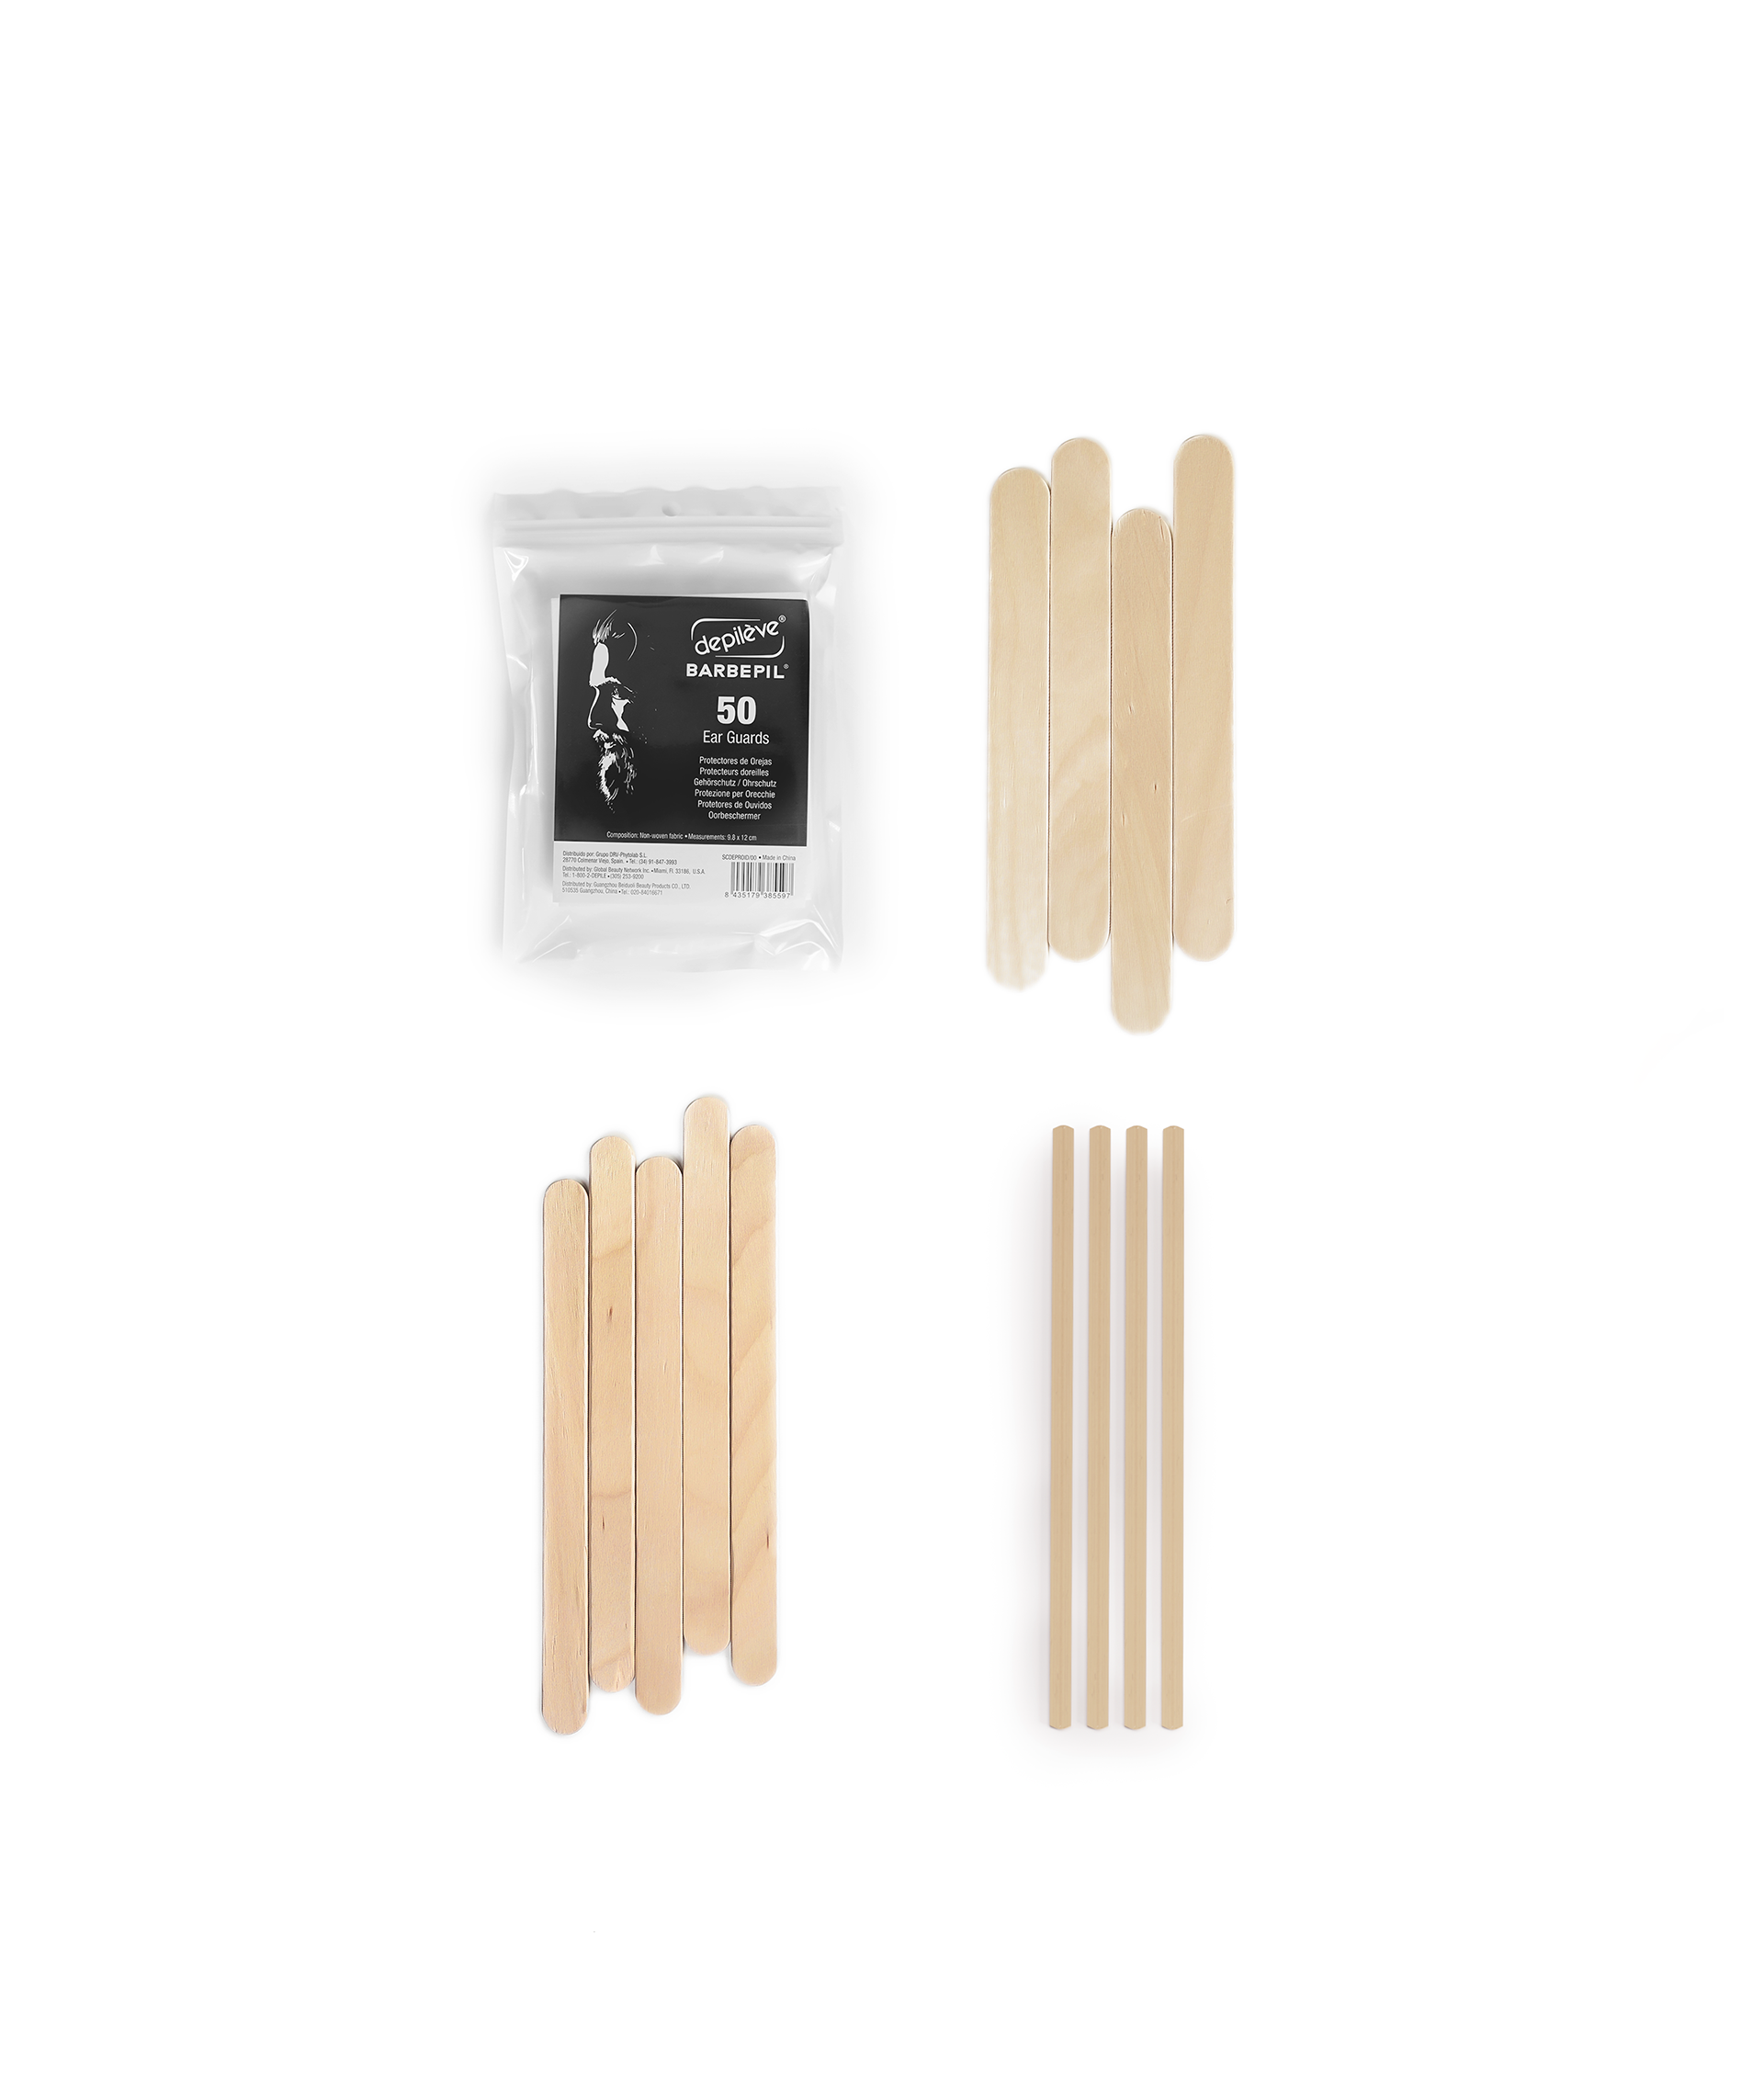  Depileve Wooden Facial Applicators -Wood Sticks for